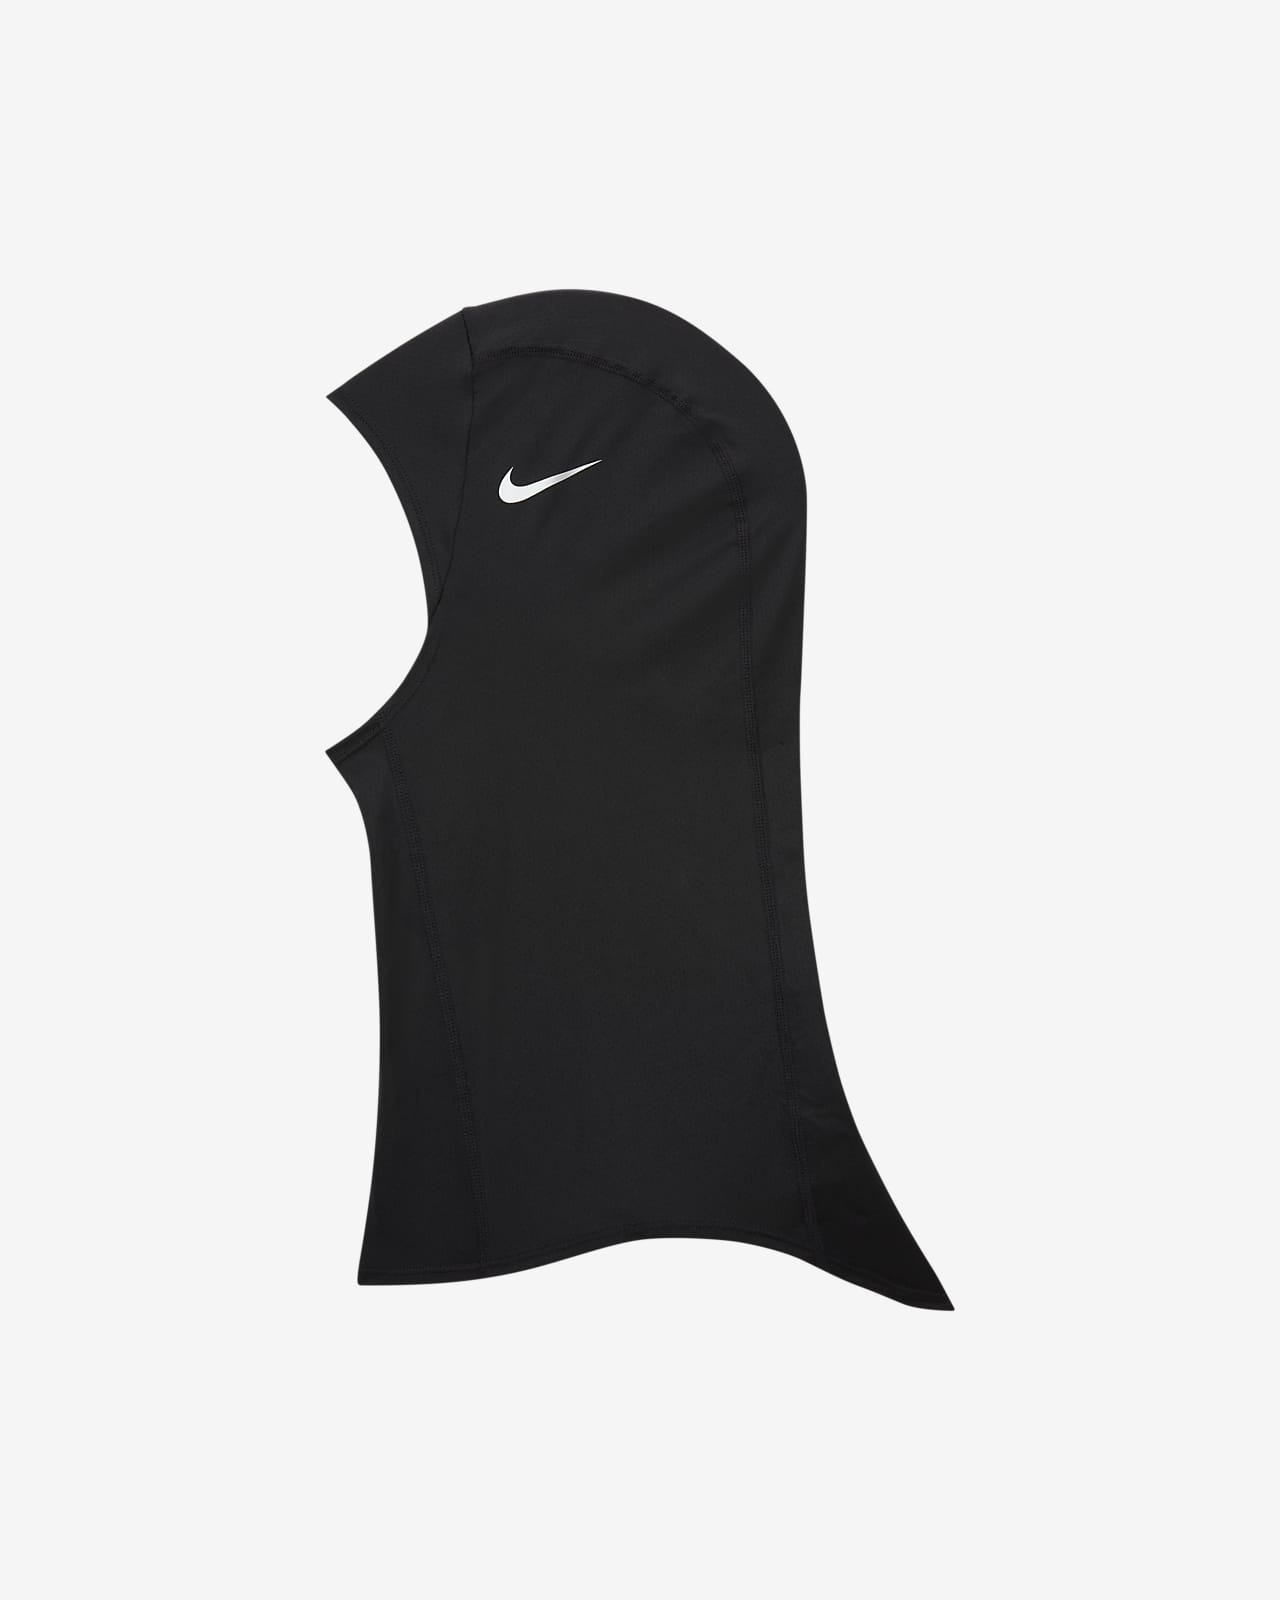 malicioso hardware desesperación Nike Pro Hijab. Nike.com